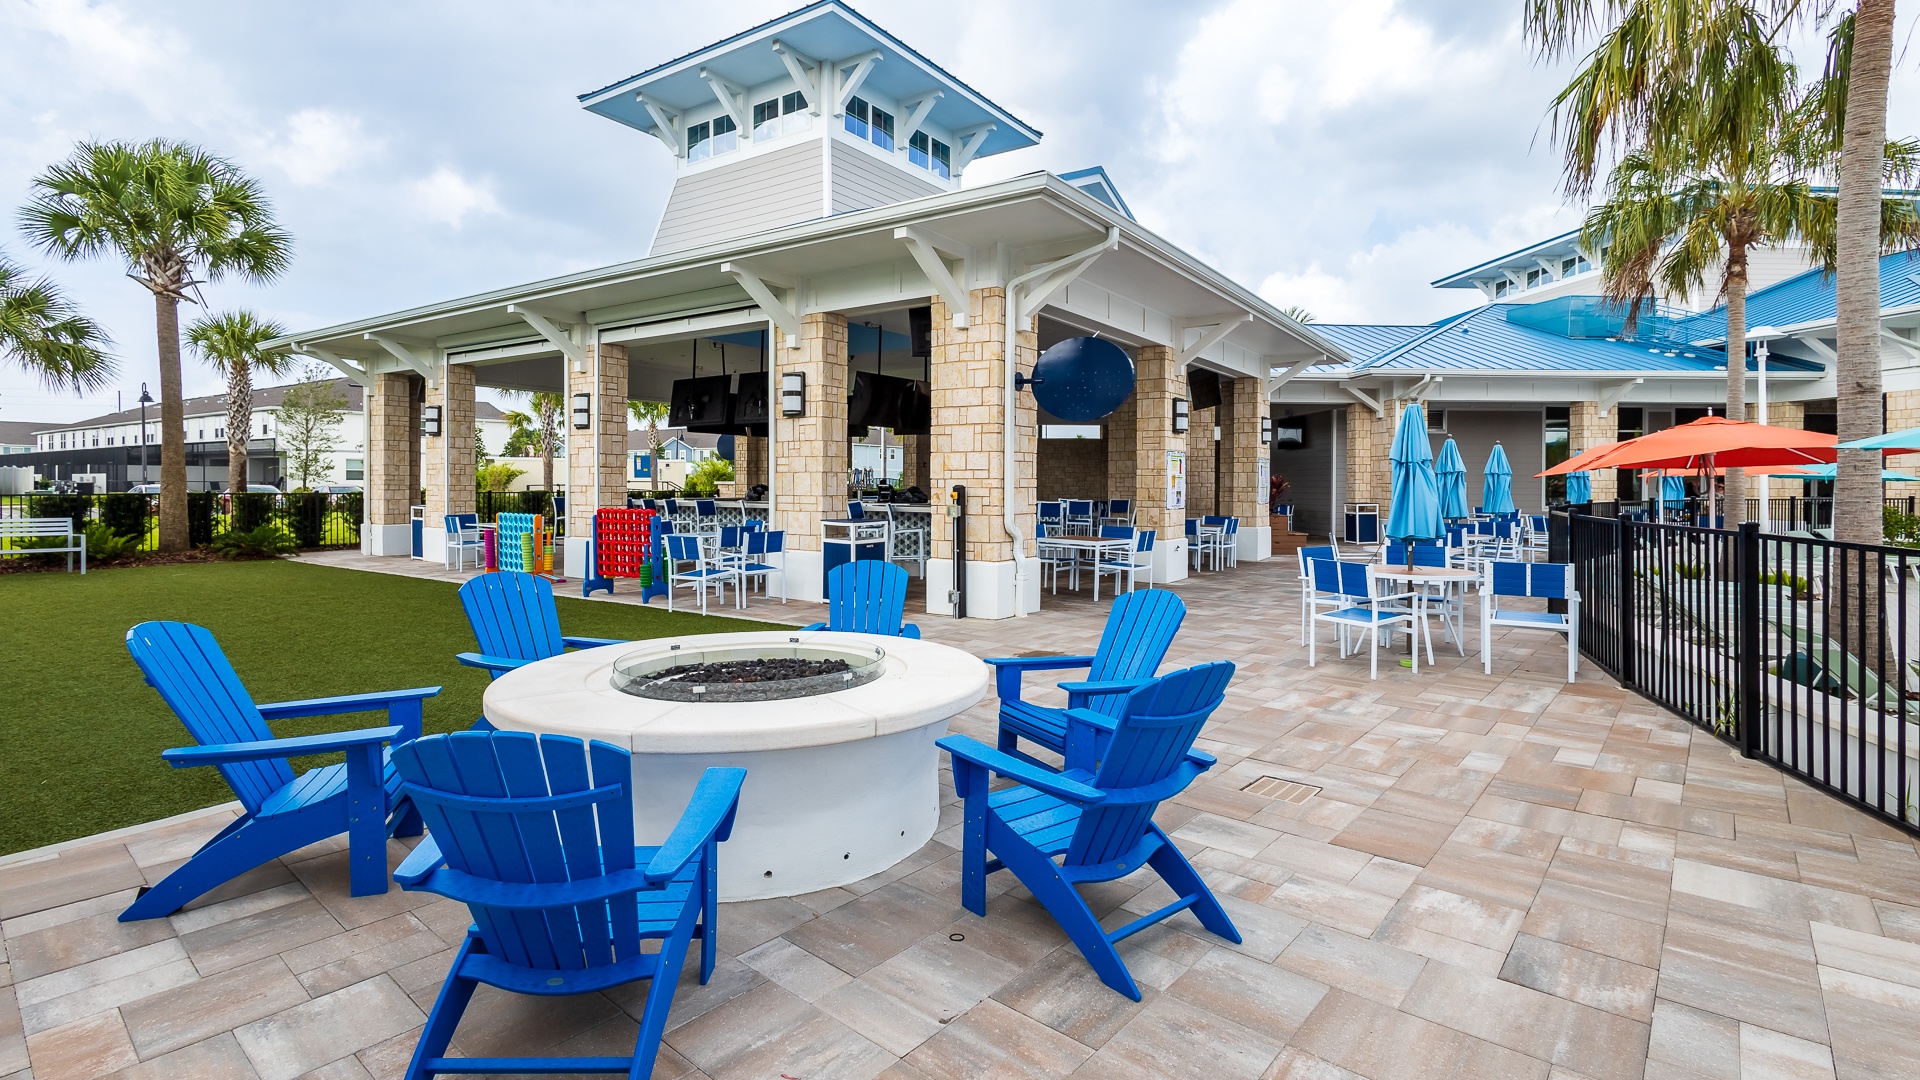 Enjoy the fabulous community amenities of Windsor Island Resort